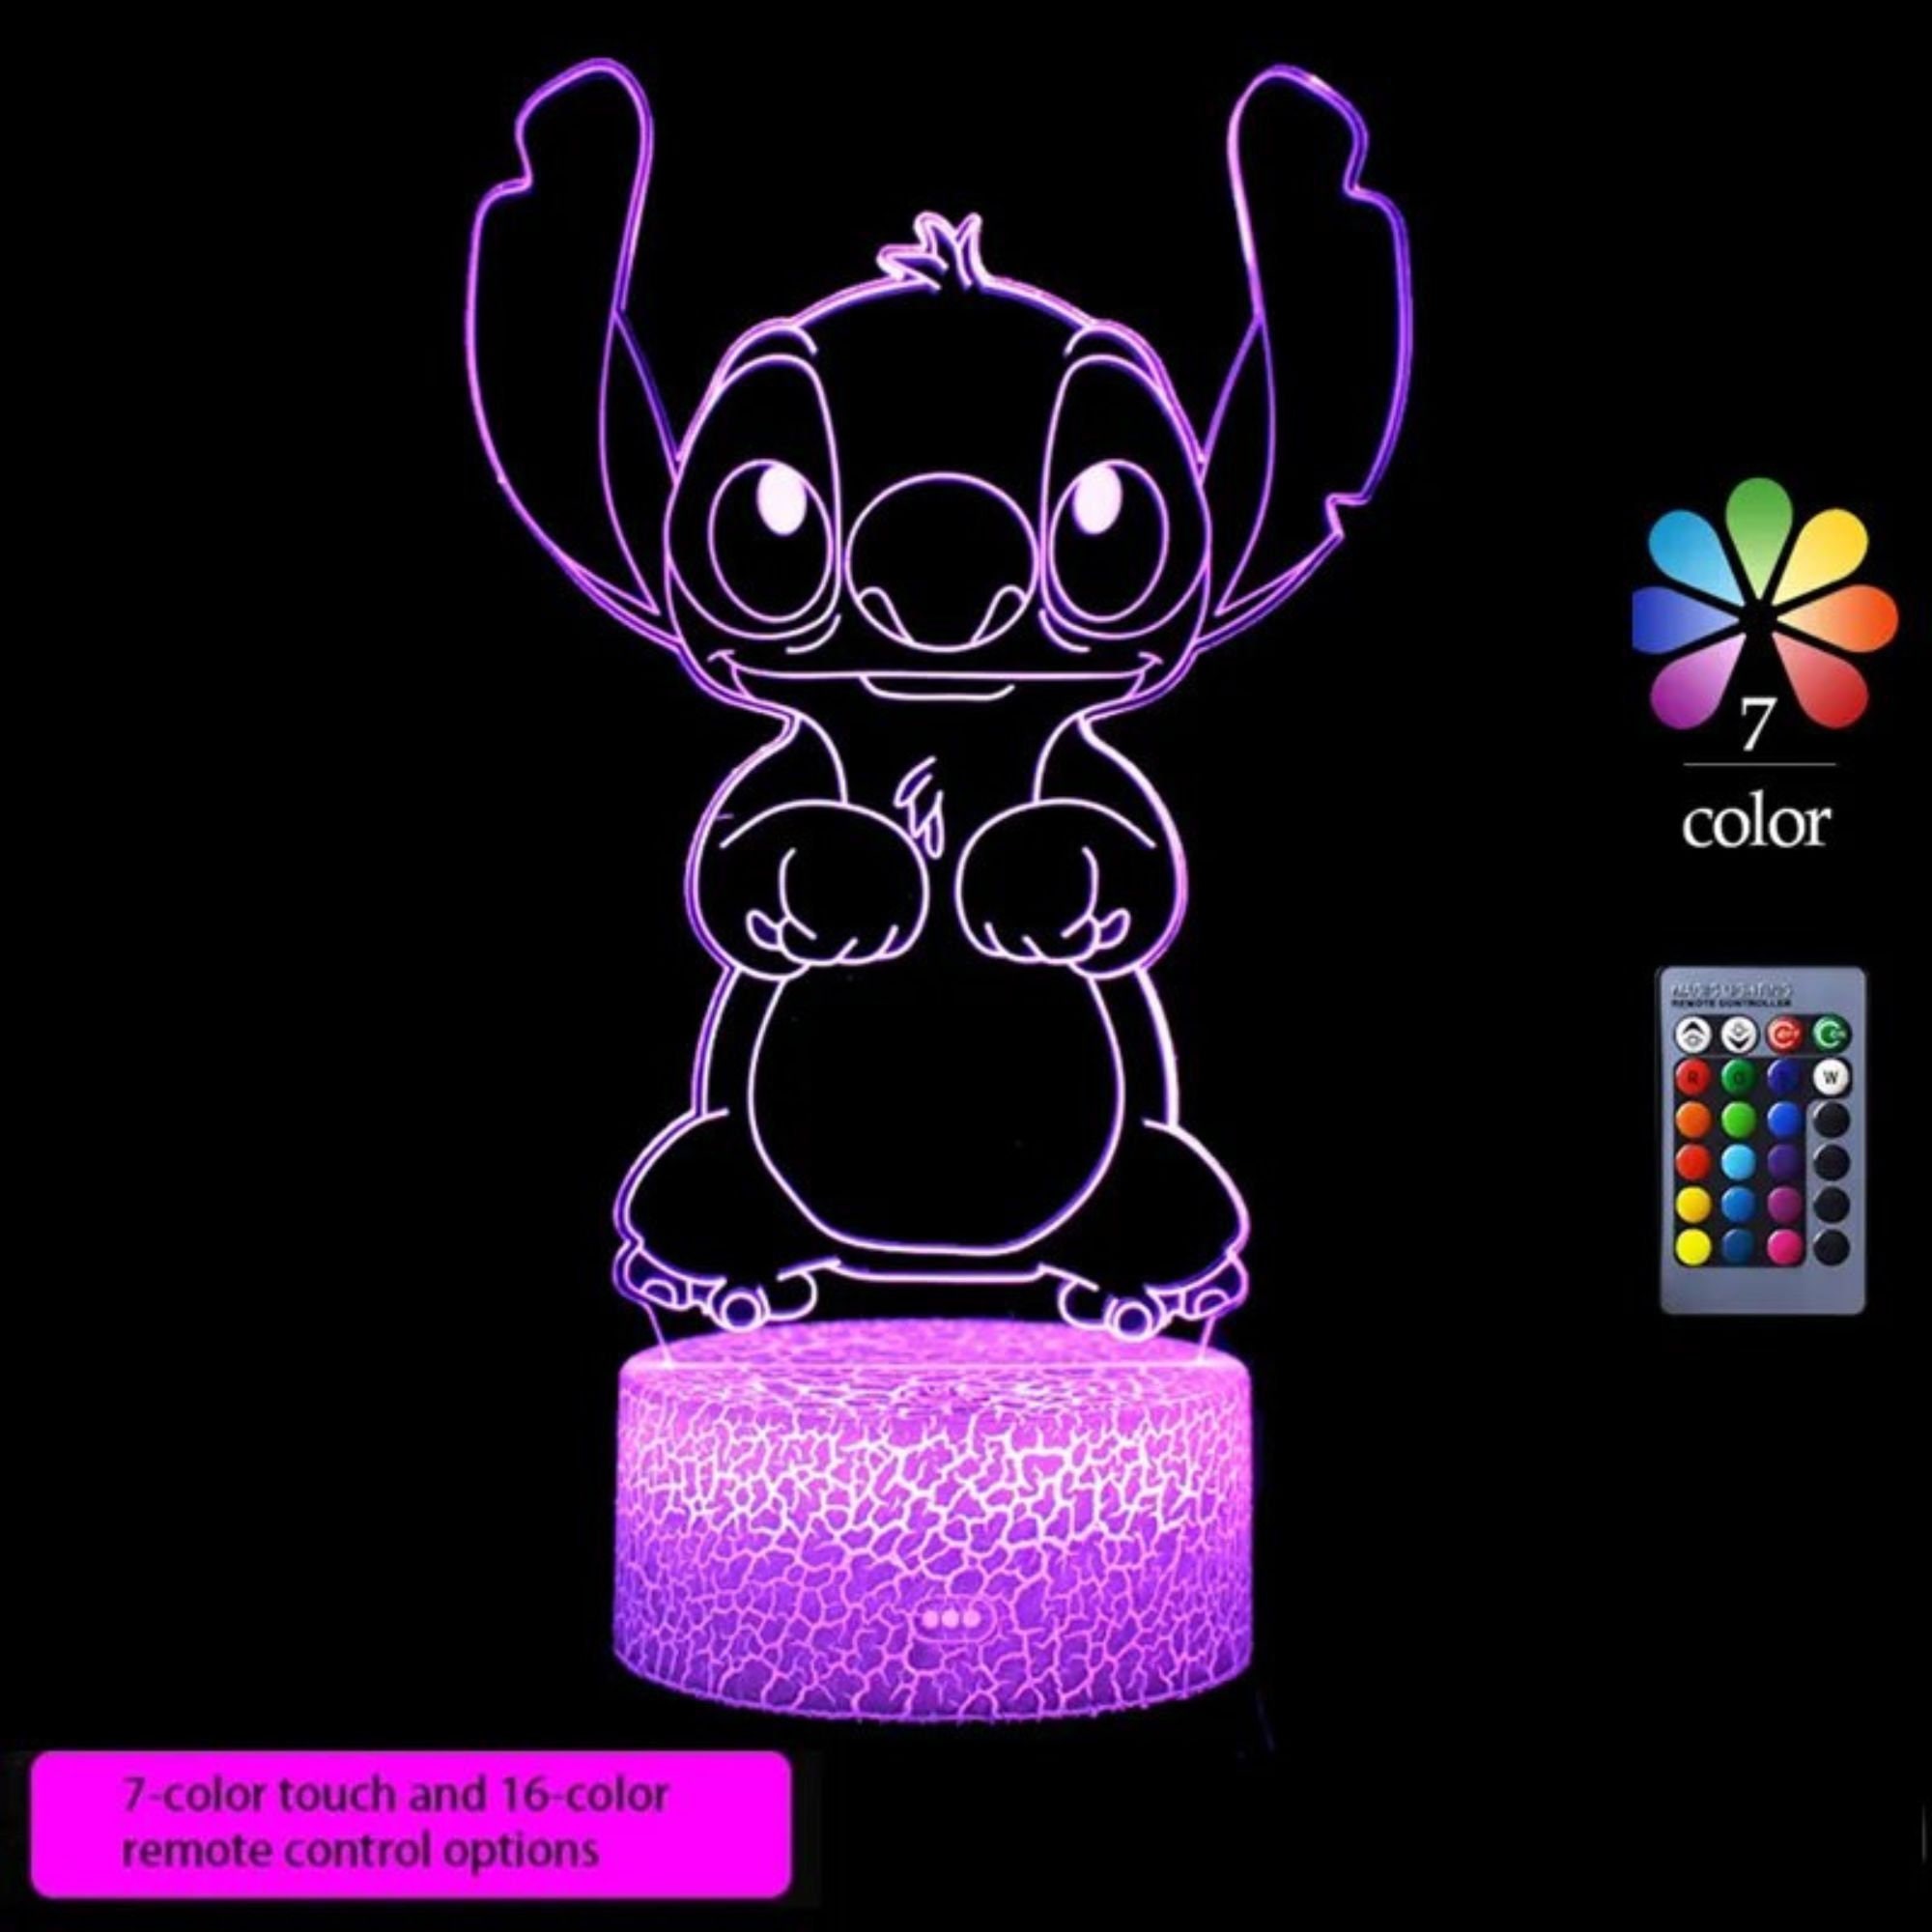 Just Disney - Stitch LED lamp 😍😍 www.justdisney.co